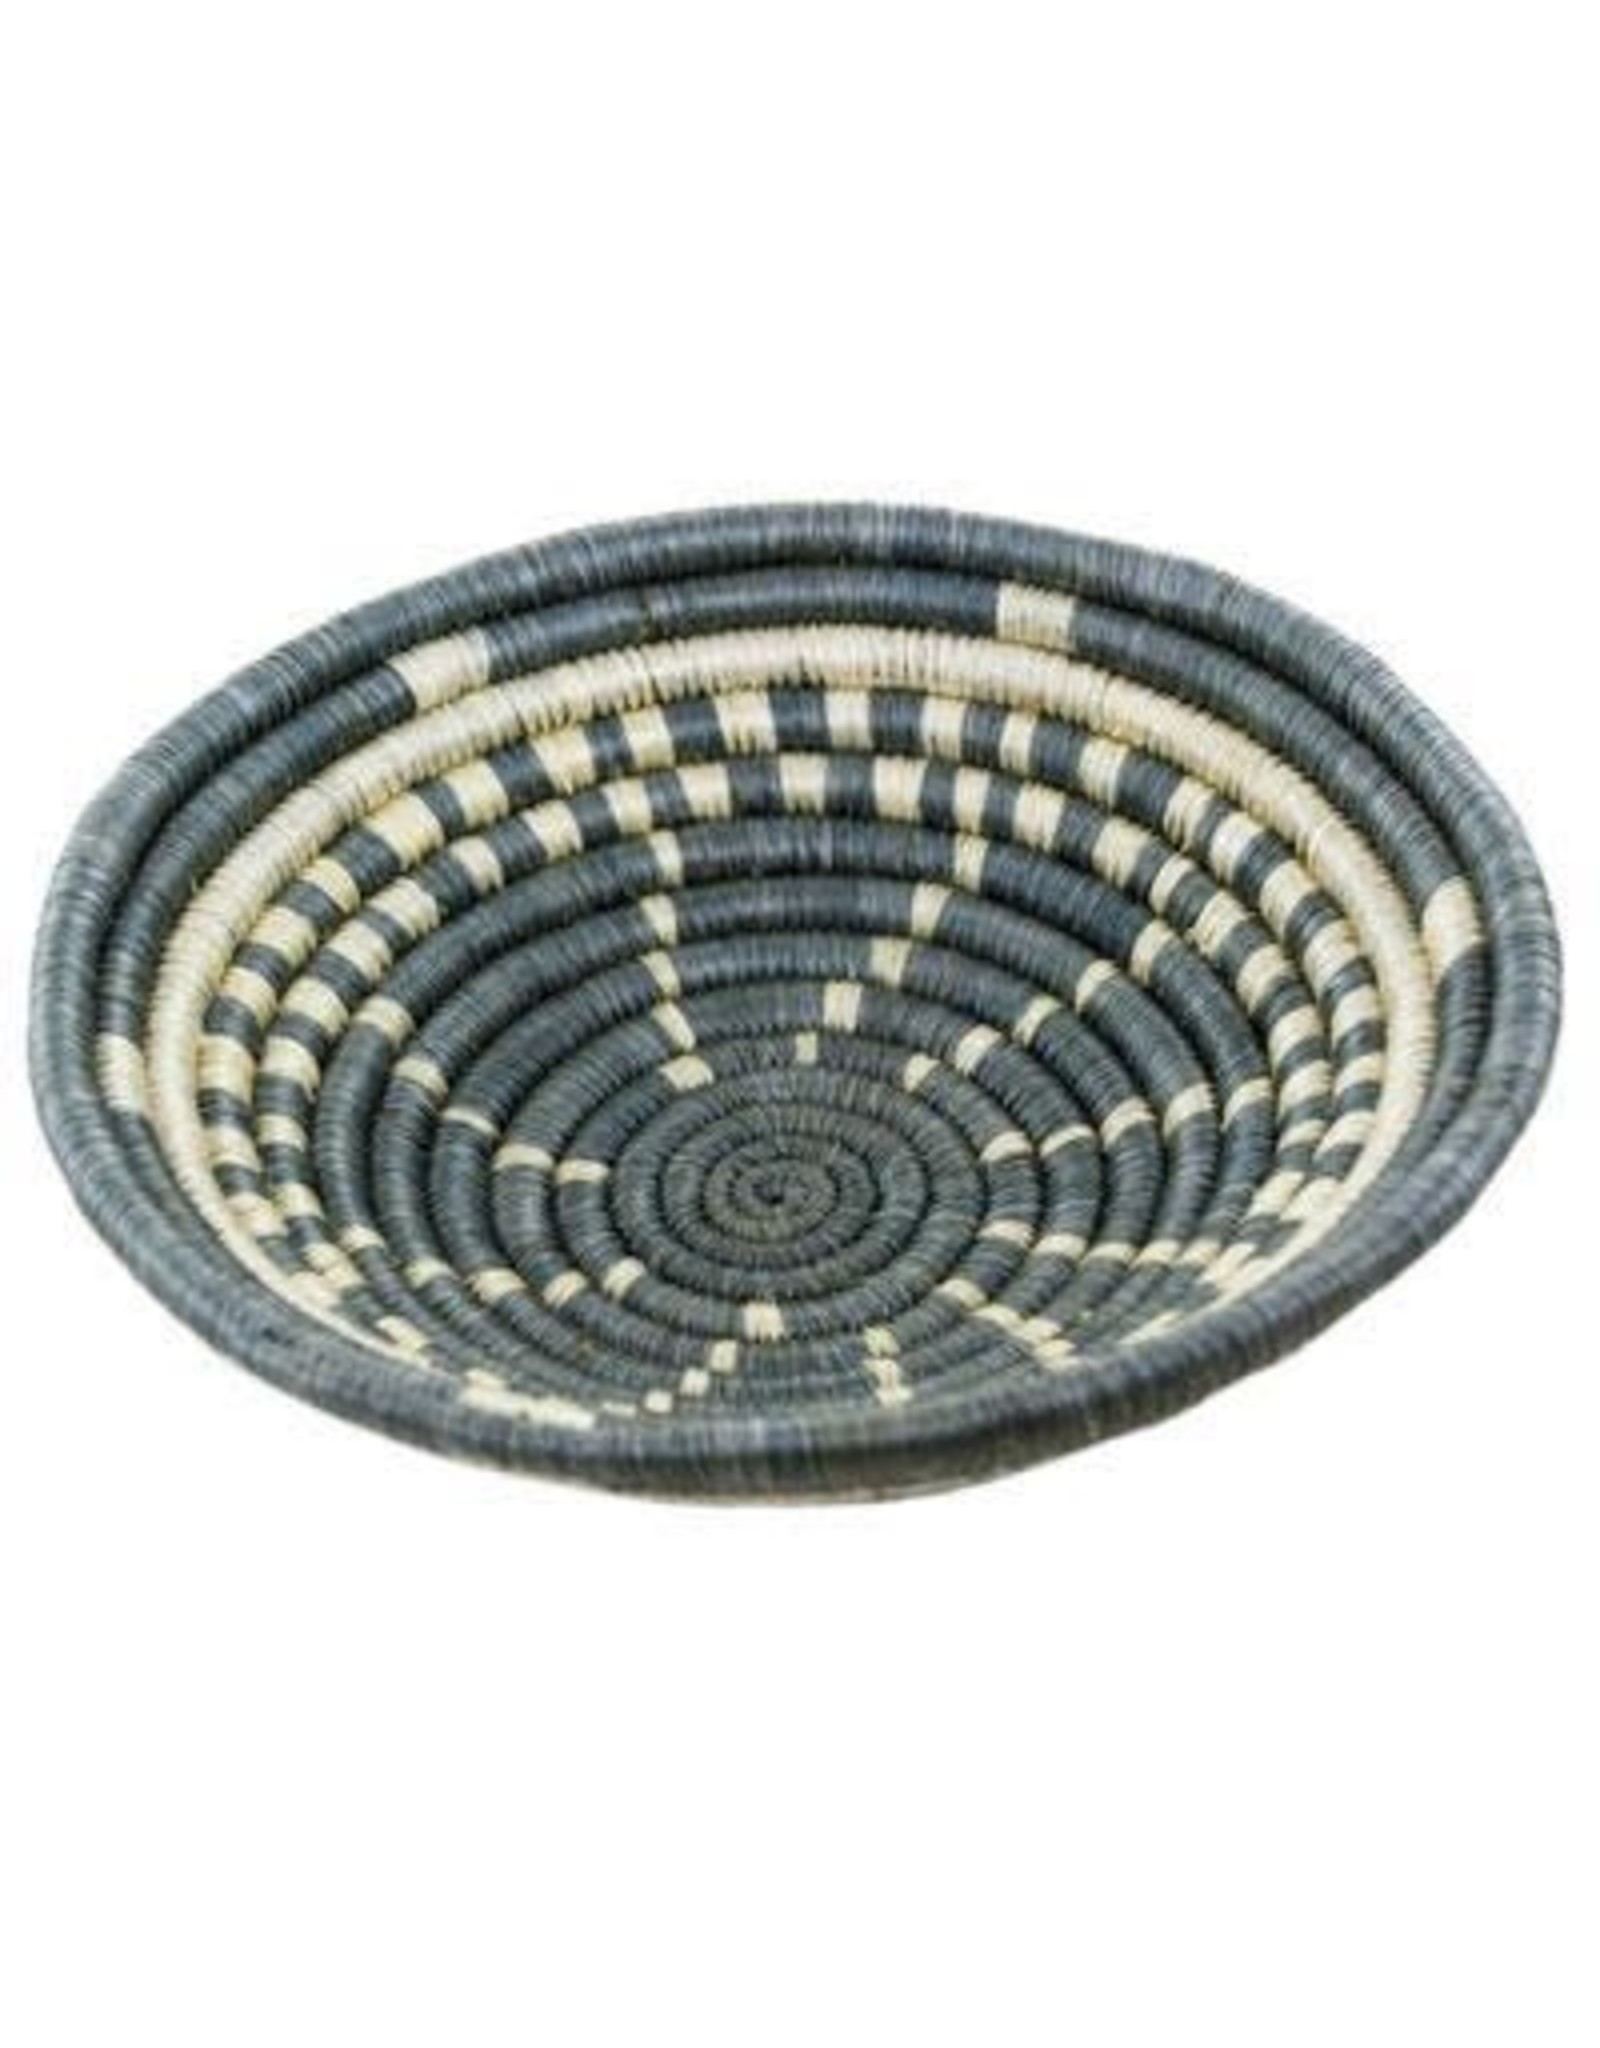 Trade roots Agaseke Woven Bowl Basket, Dark Gray/White